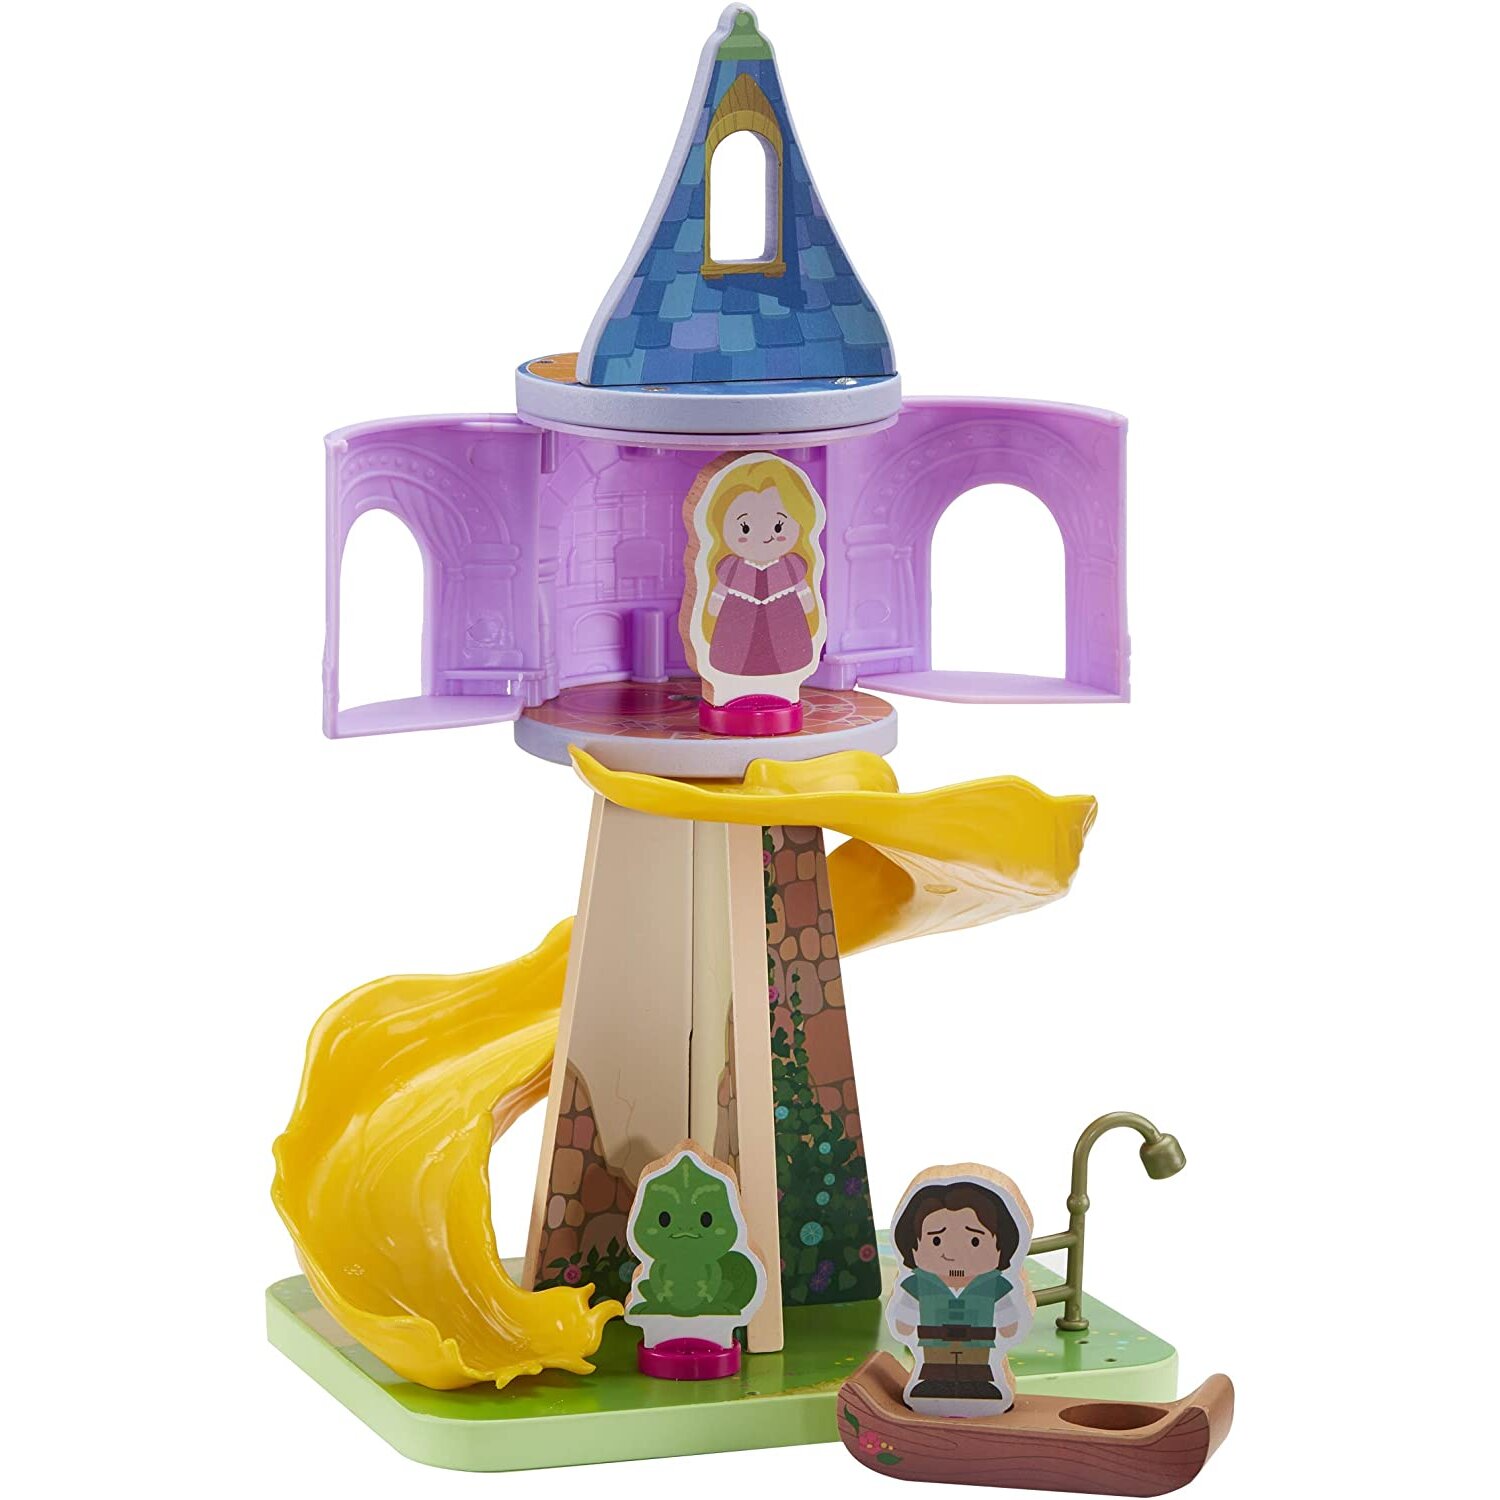 Wooden Rapunzel'S Tower